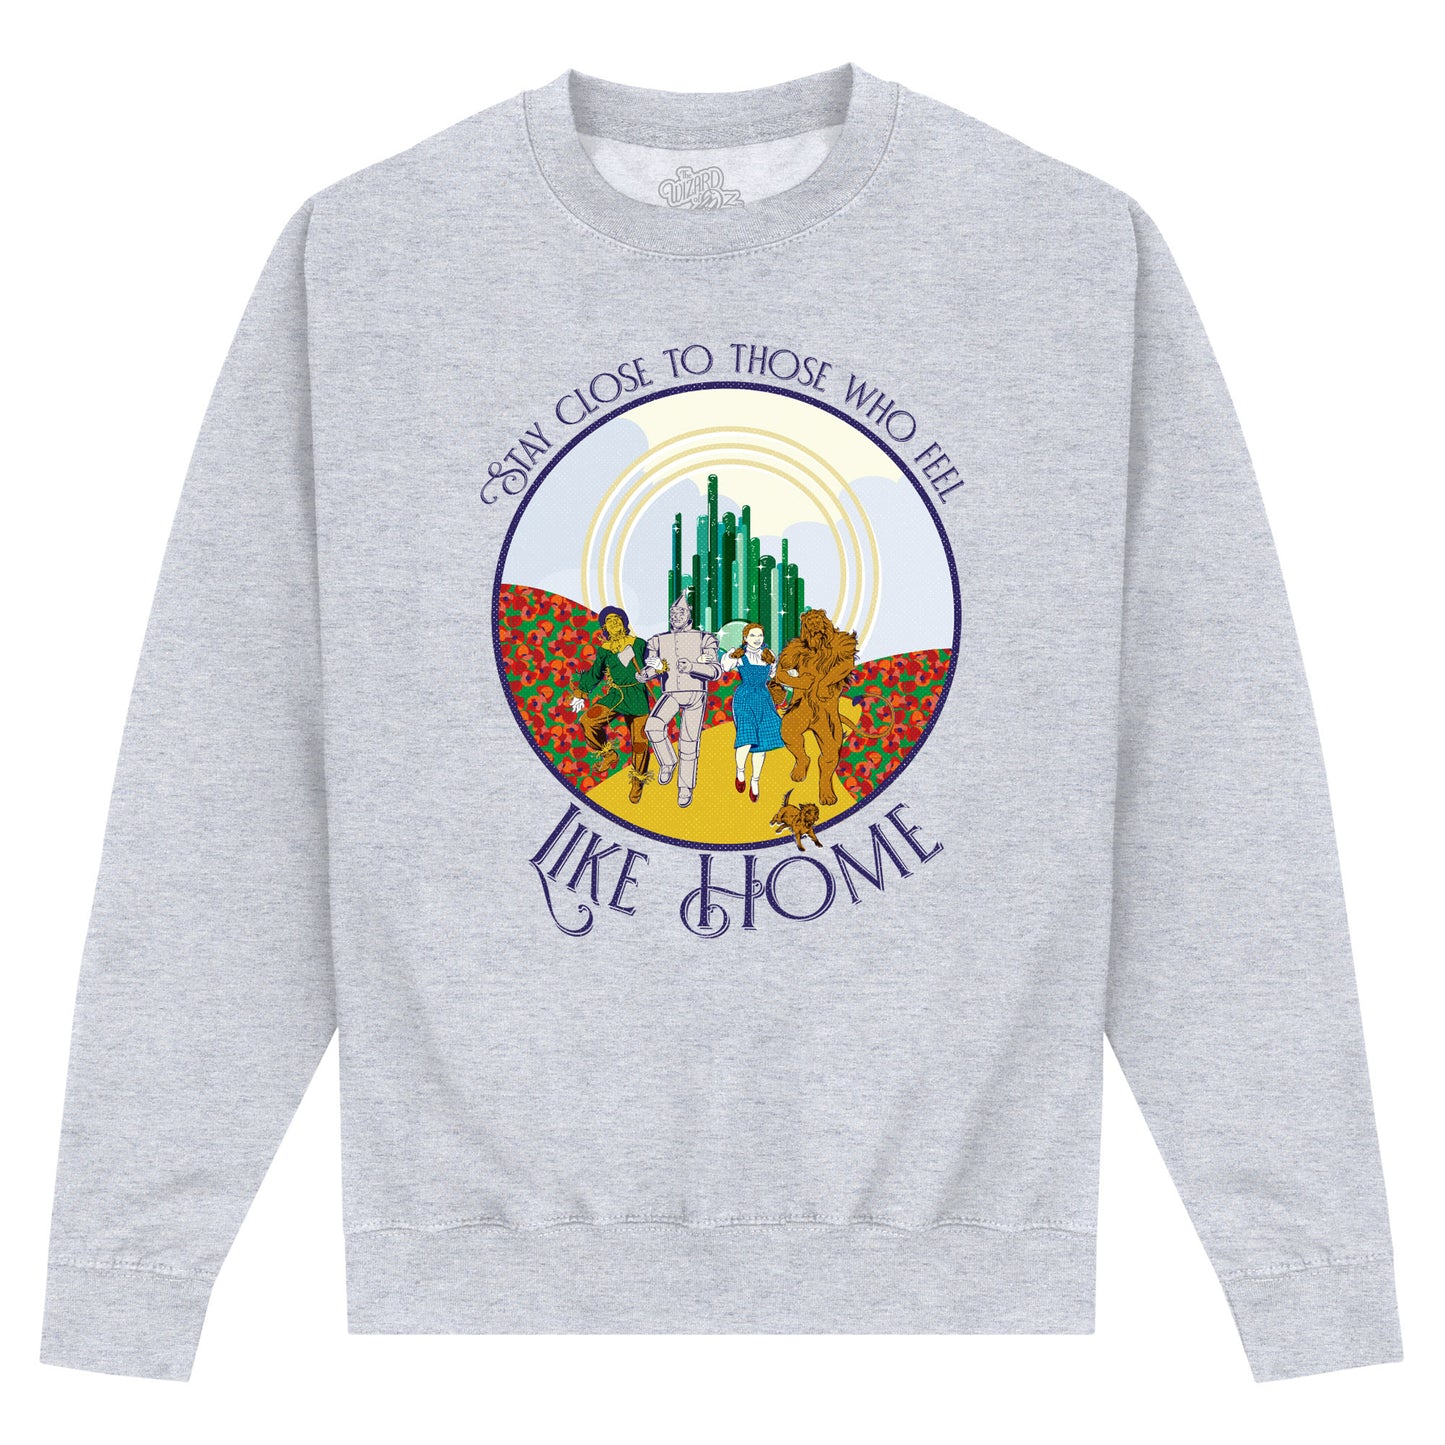 The Wizard of Oz Like Home Sweatshirt